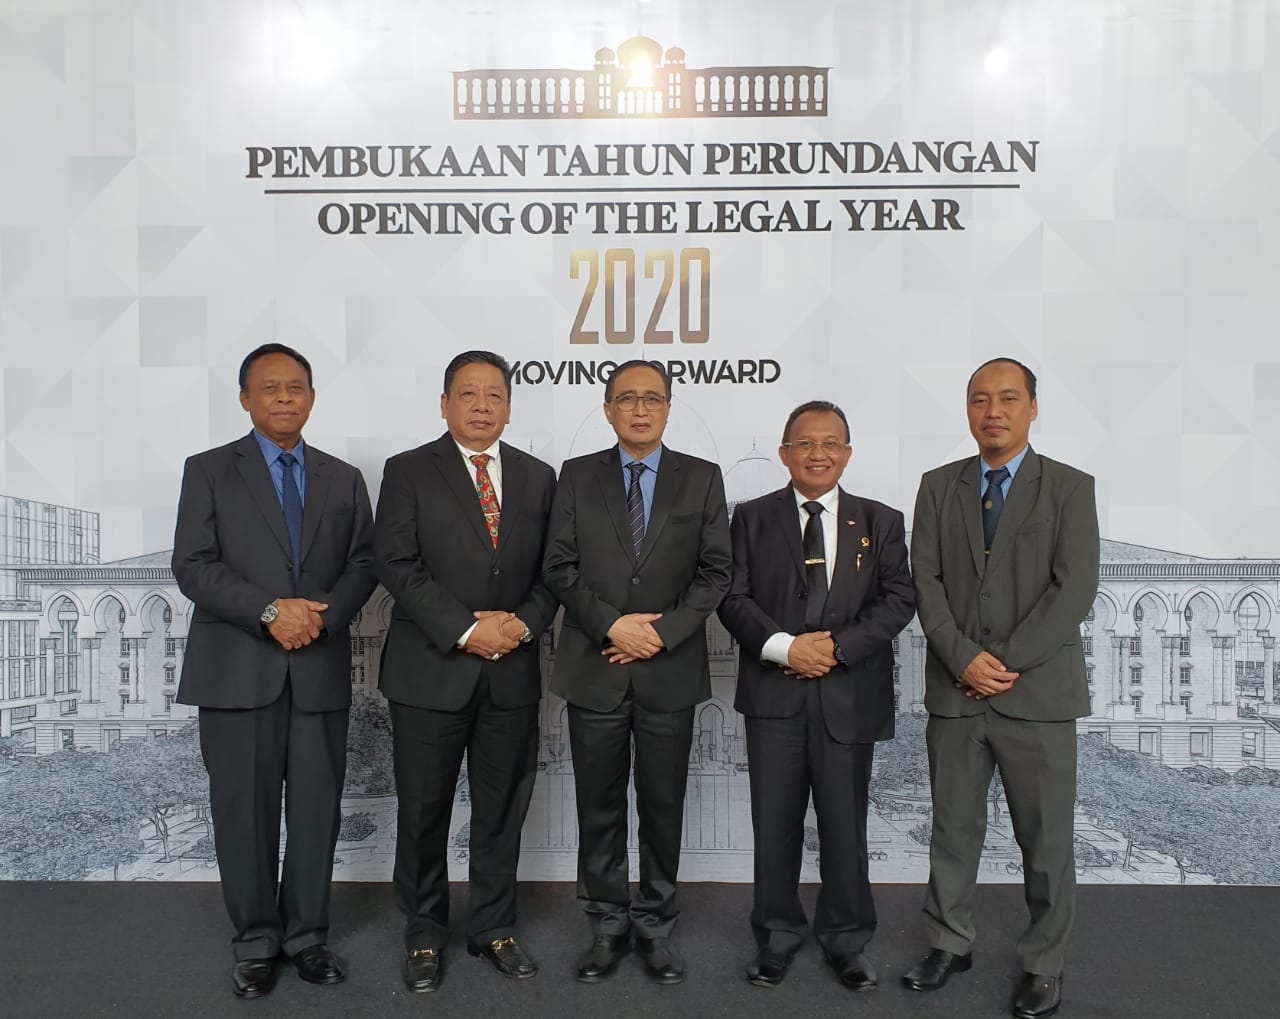 DELEGASI MA HADIRI OPENING OF THE LEGAL YEAR 2020 FEDERAL COURT OF MALAYSIA